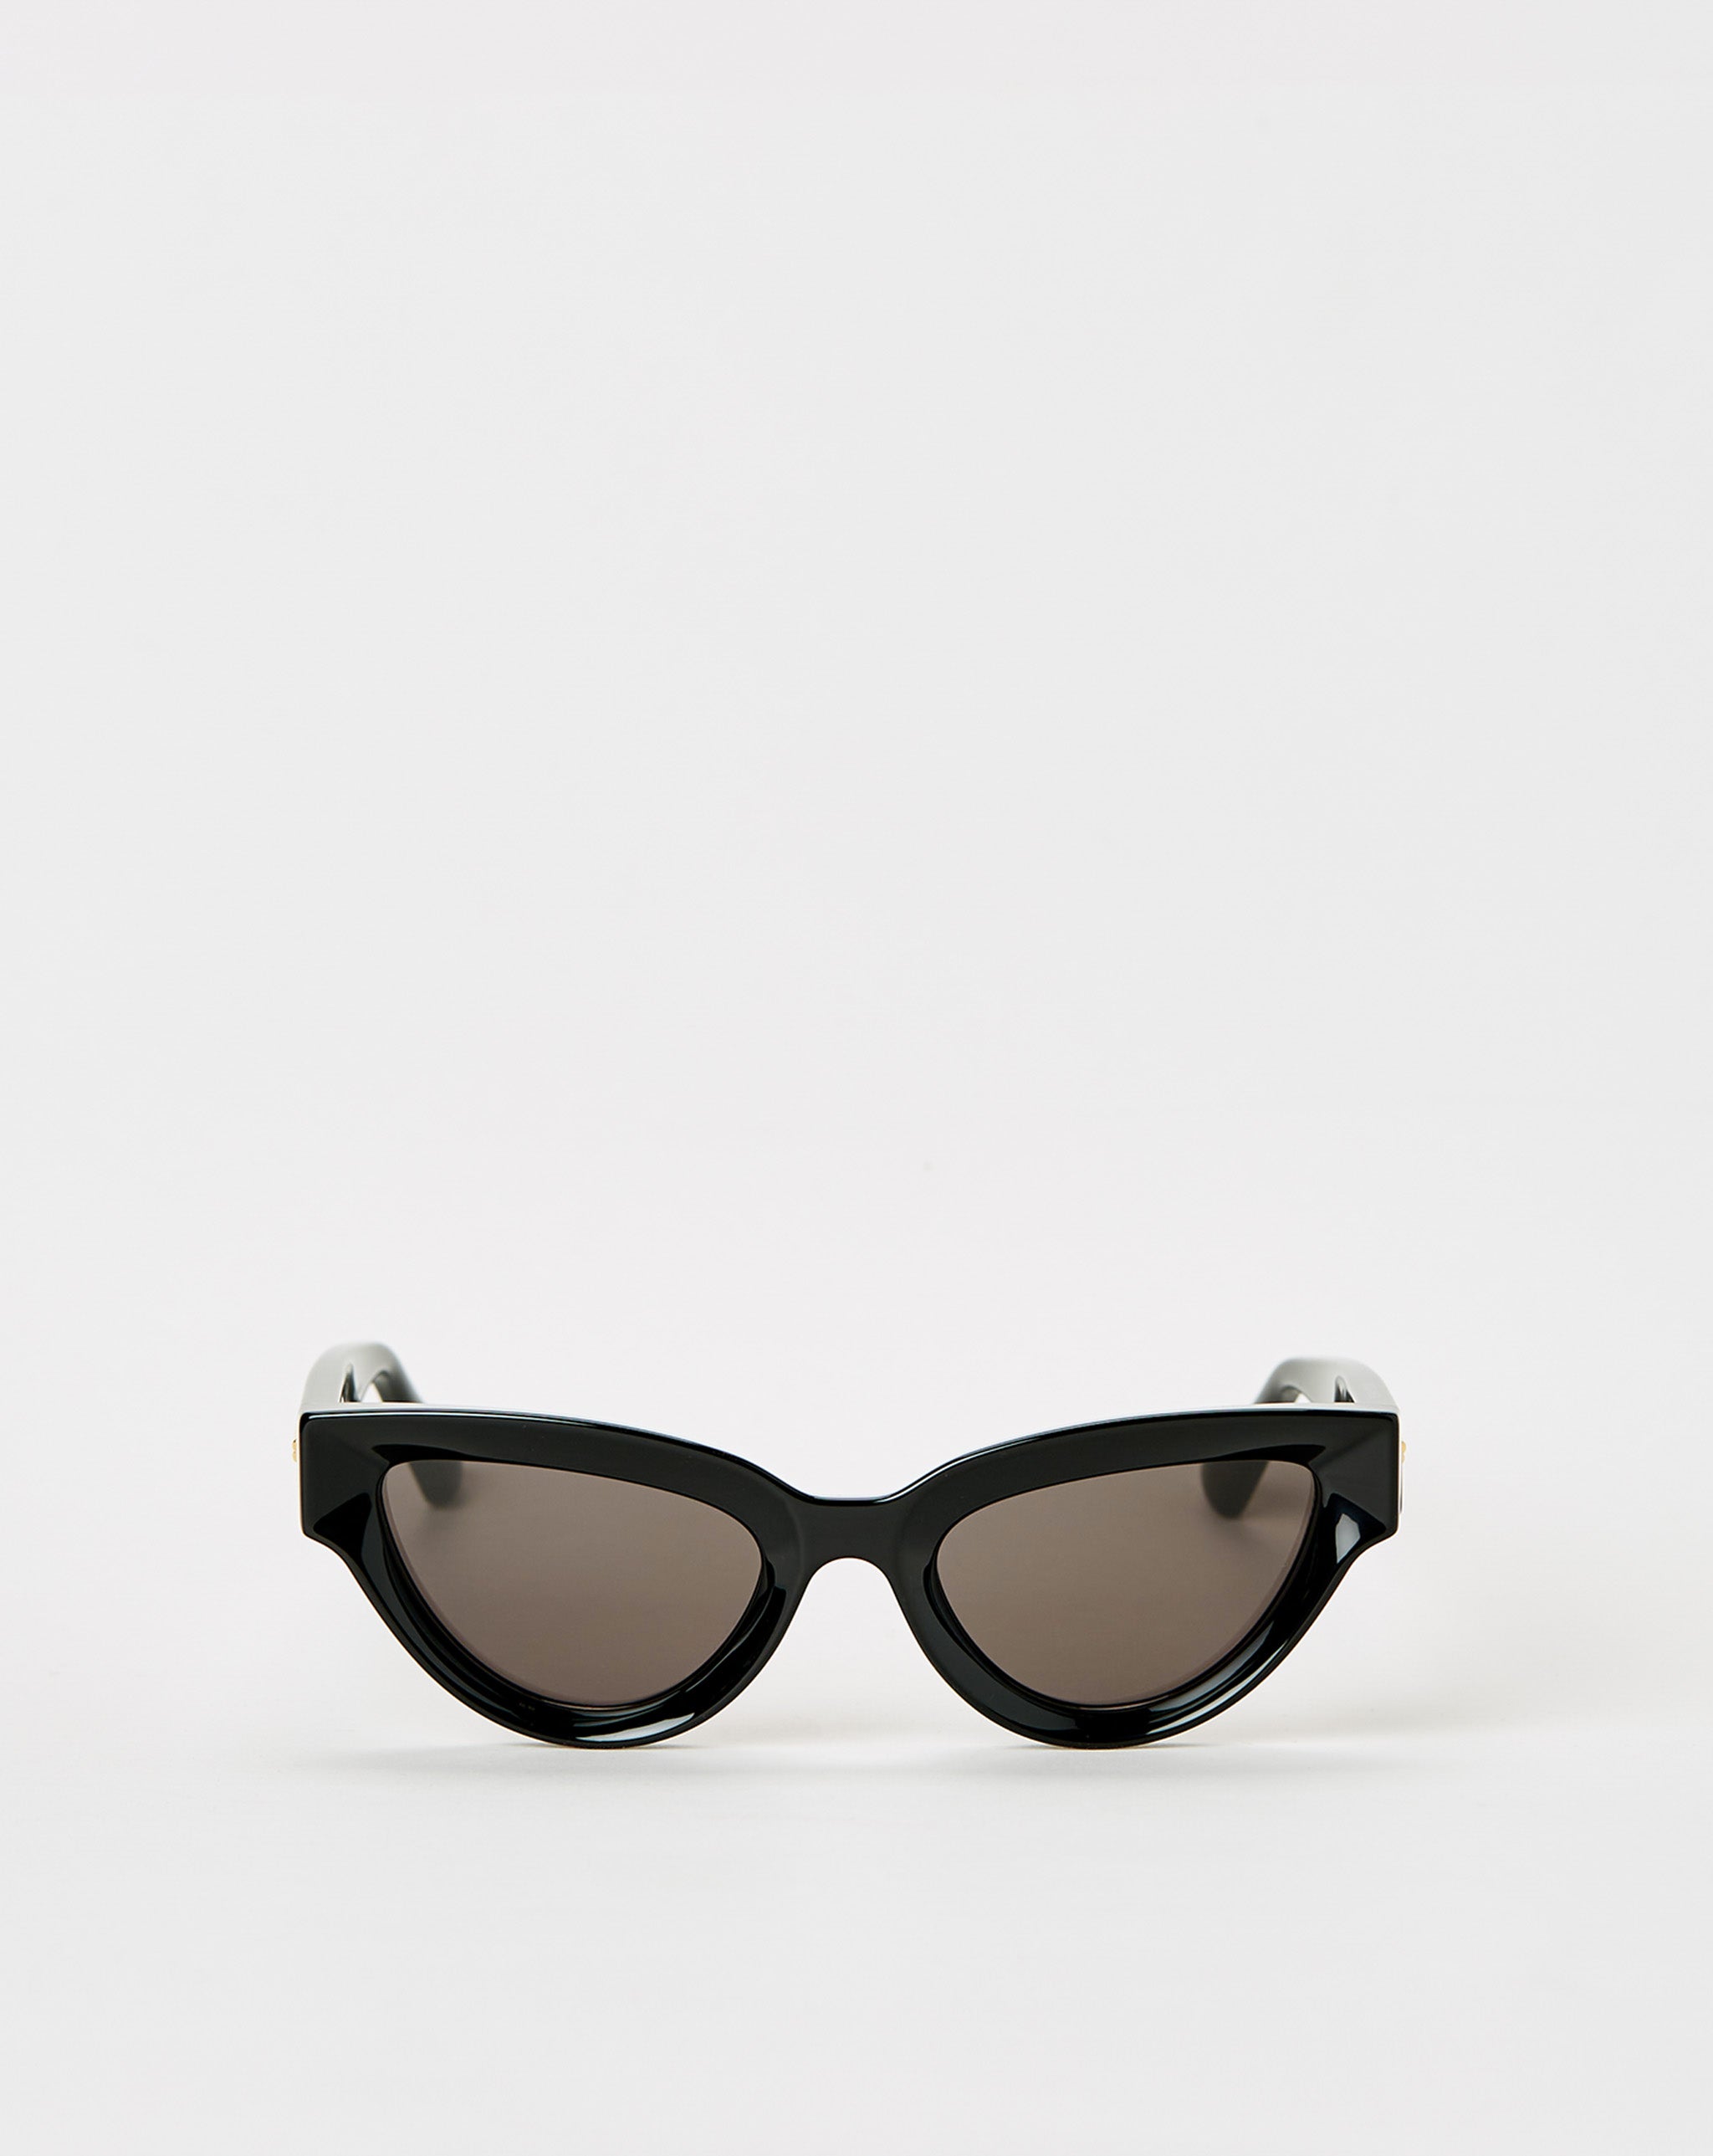 Bottega Veneta porter x oliver peoples folding sunglasses  - Cheap Cerbe Jordan outlet